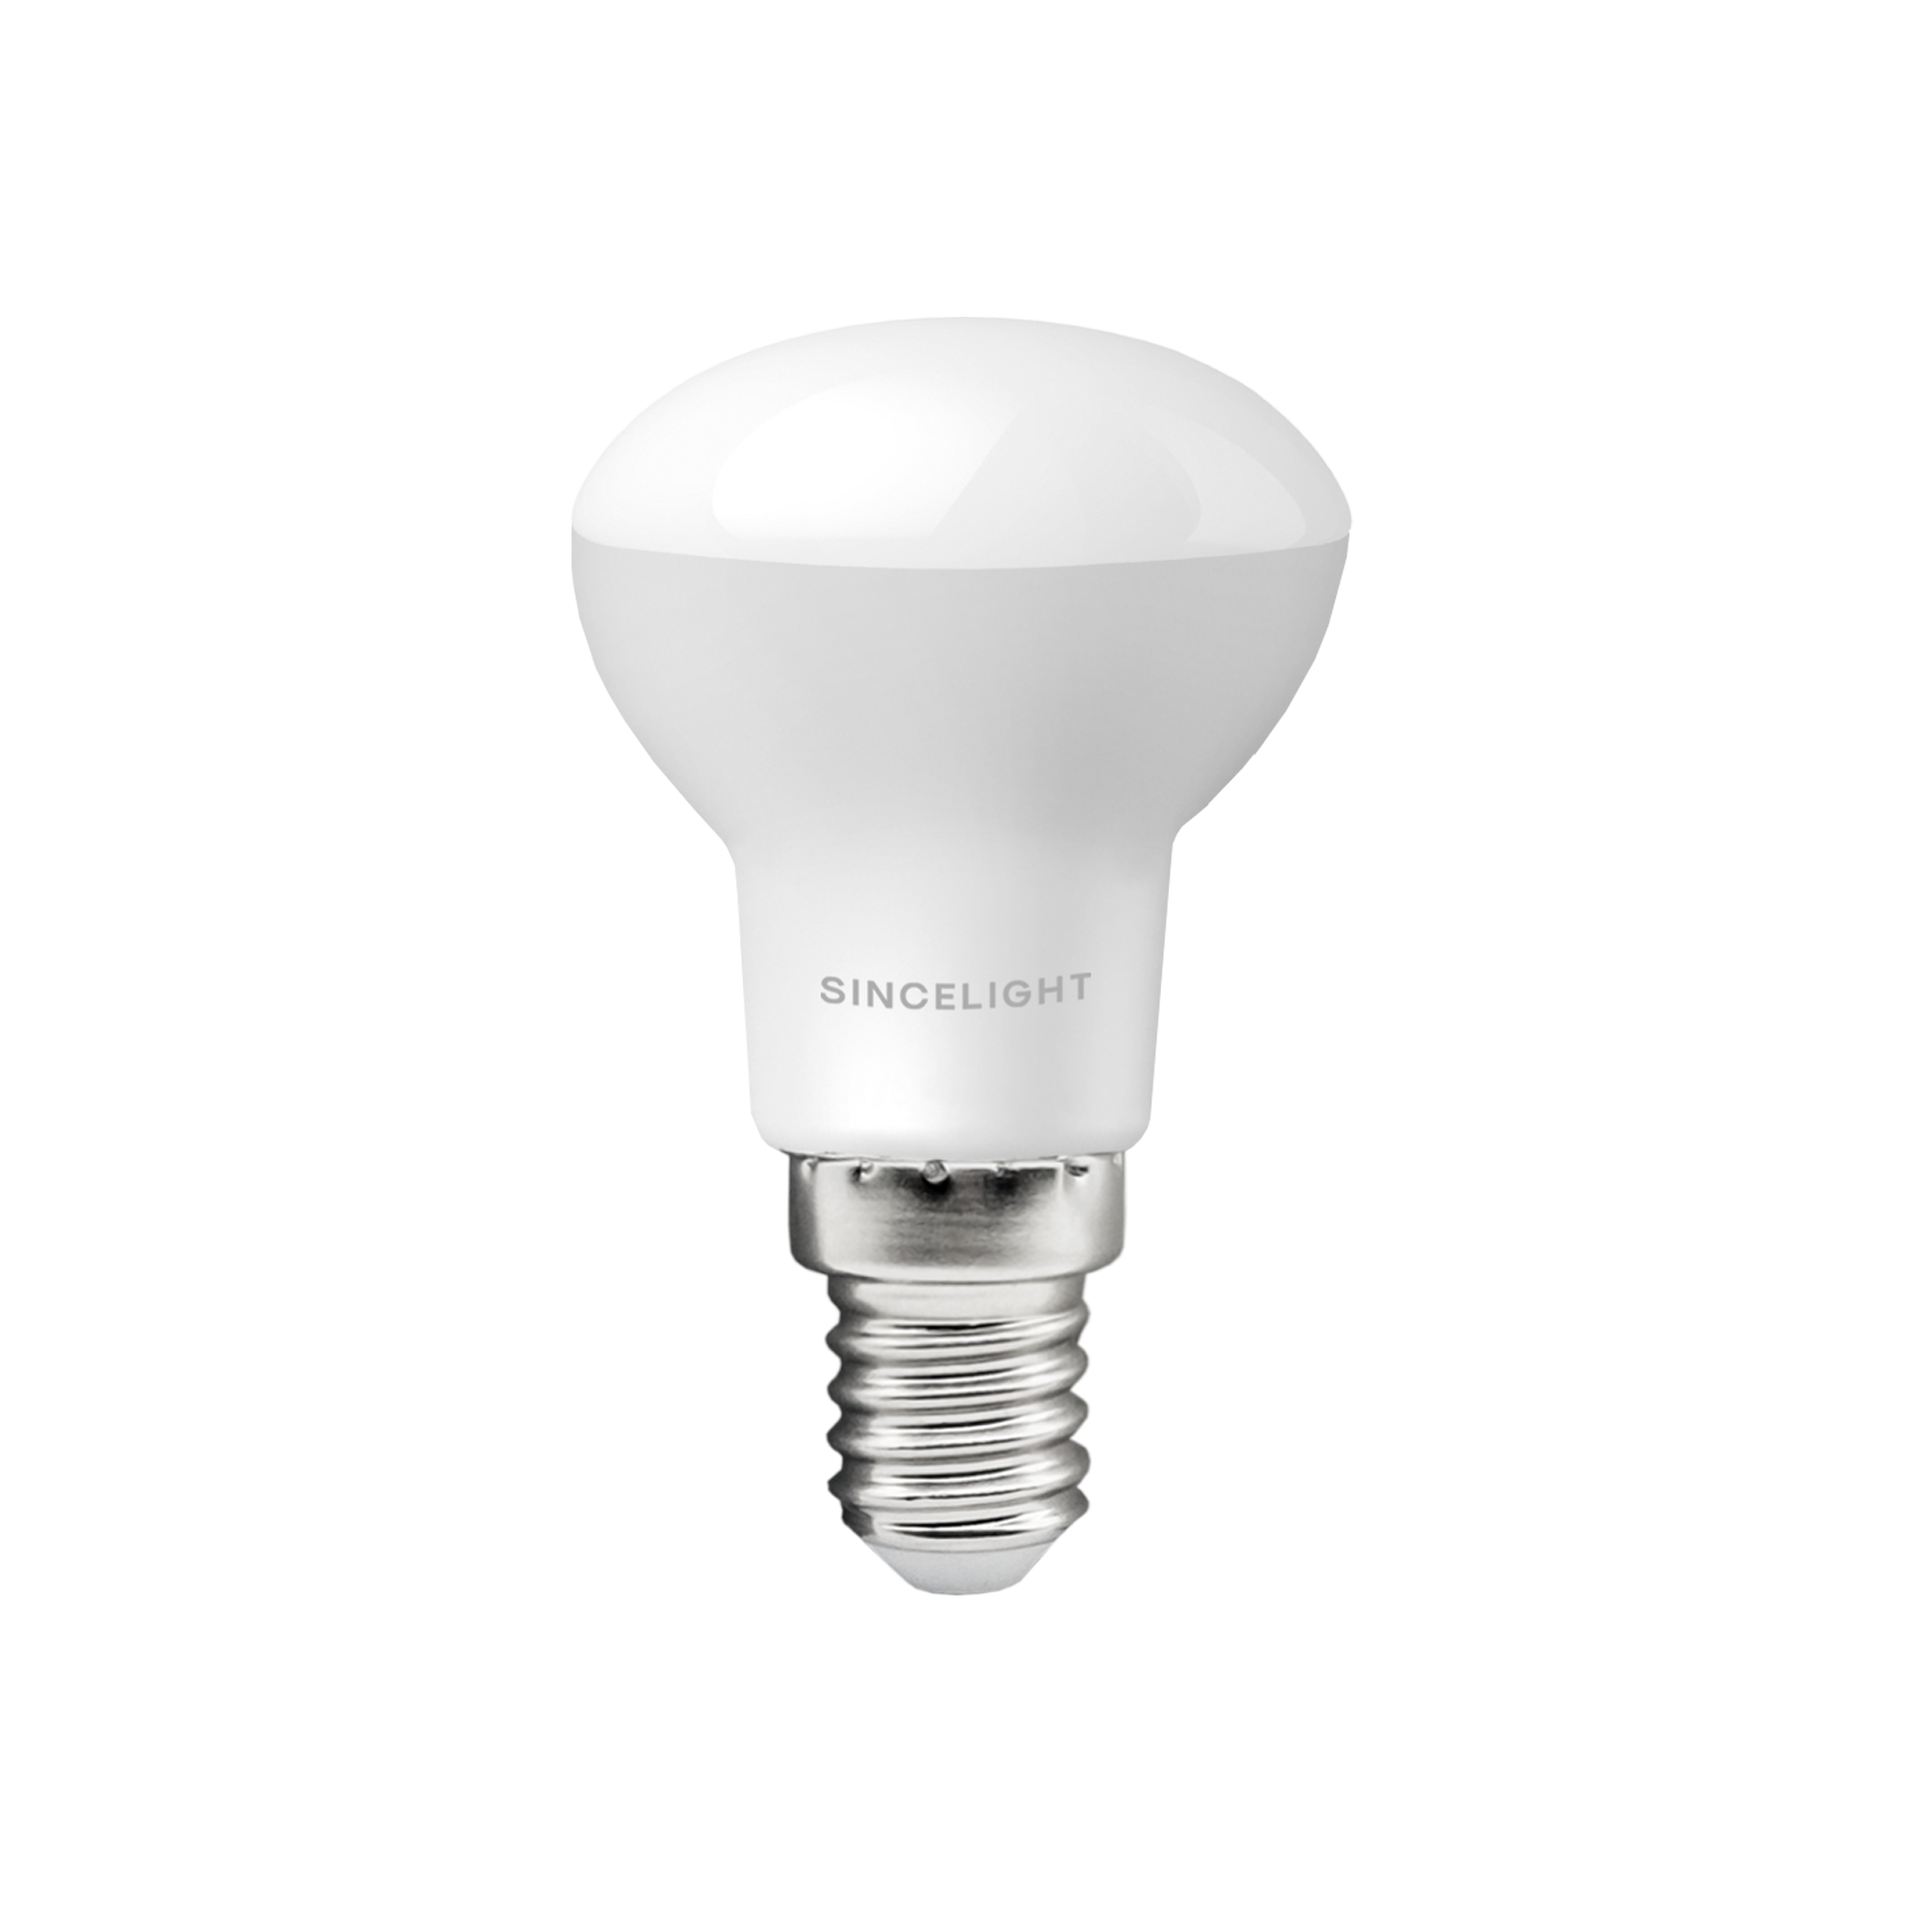 5W LED R39 Reflector Bulb with E14 Cap